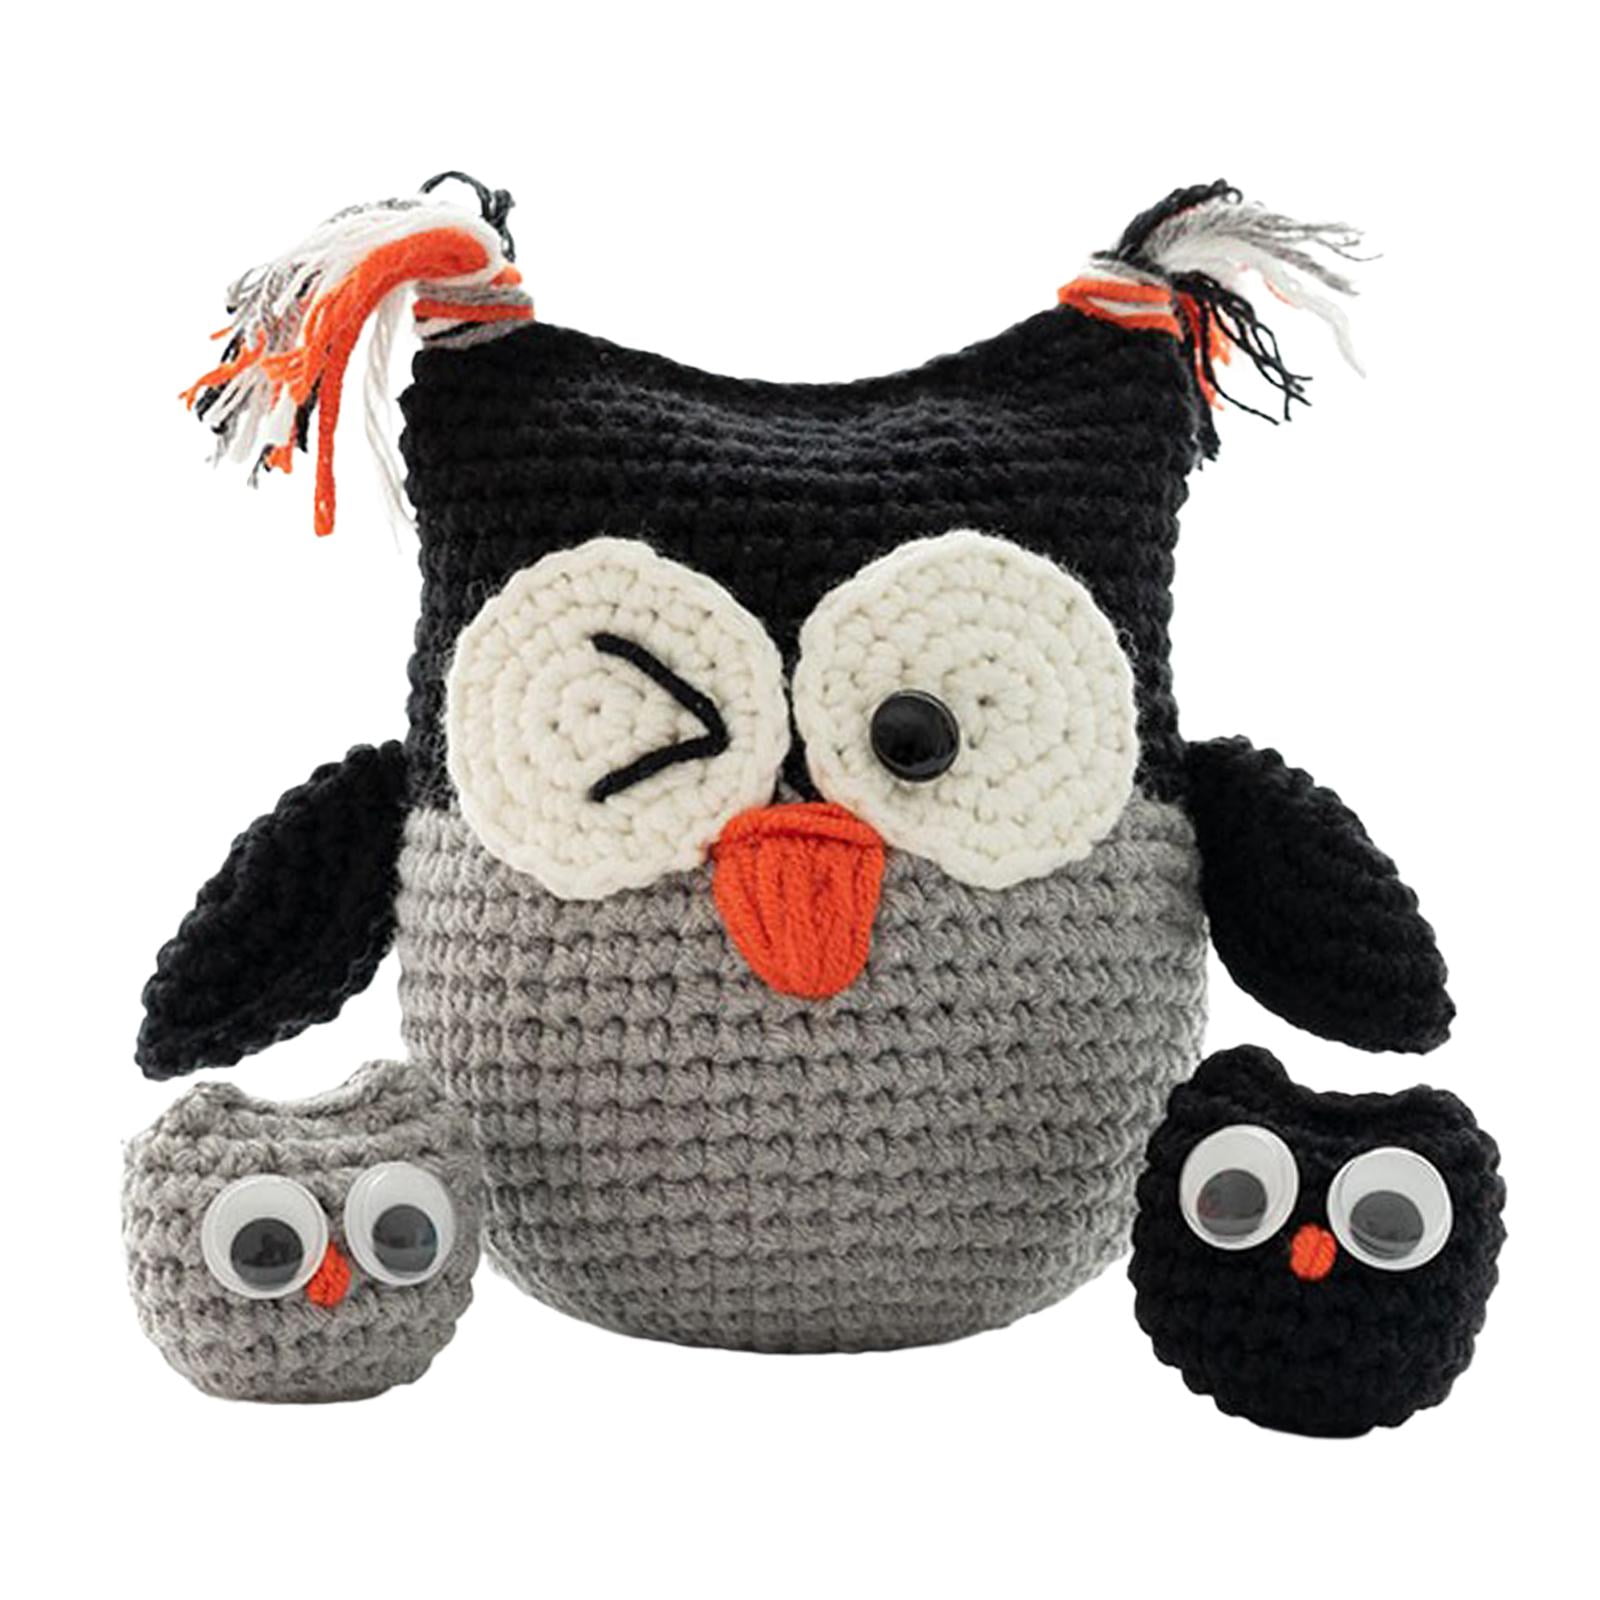 Hand Crochet Funny Owl With Glasses Stuffed Toys Animals Knit Amigurumi  Gift - Shop CrochetByIryska Kids' Toys - Pinkoi